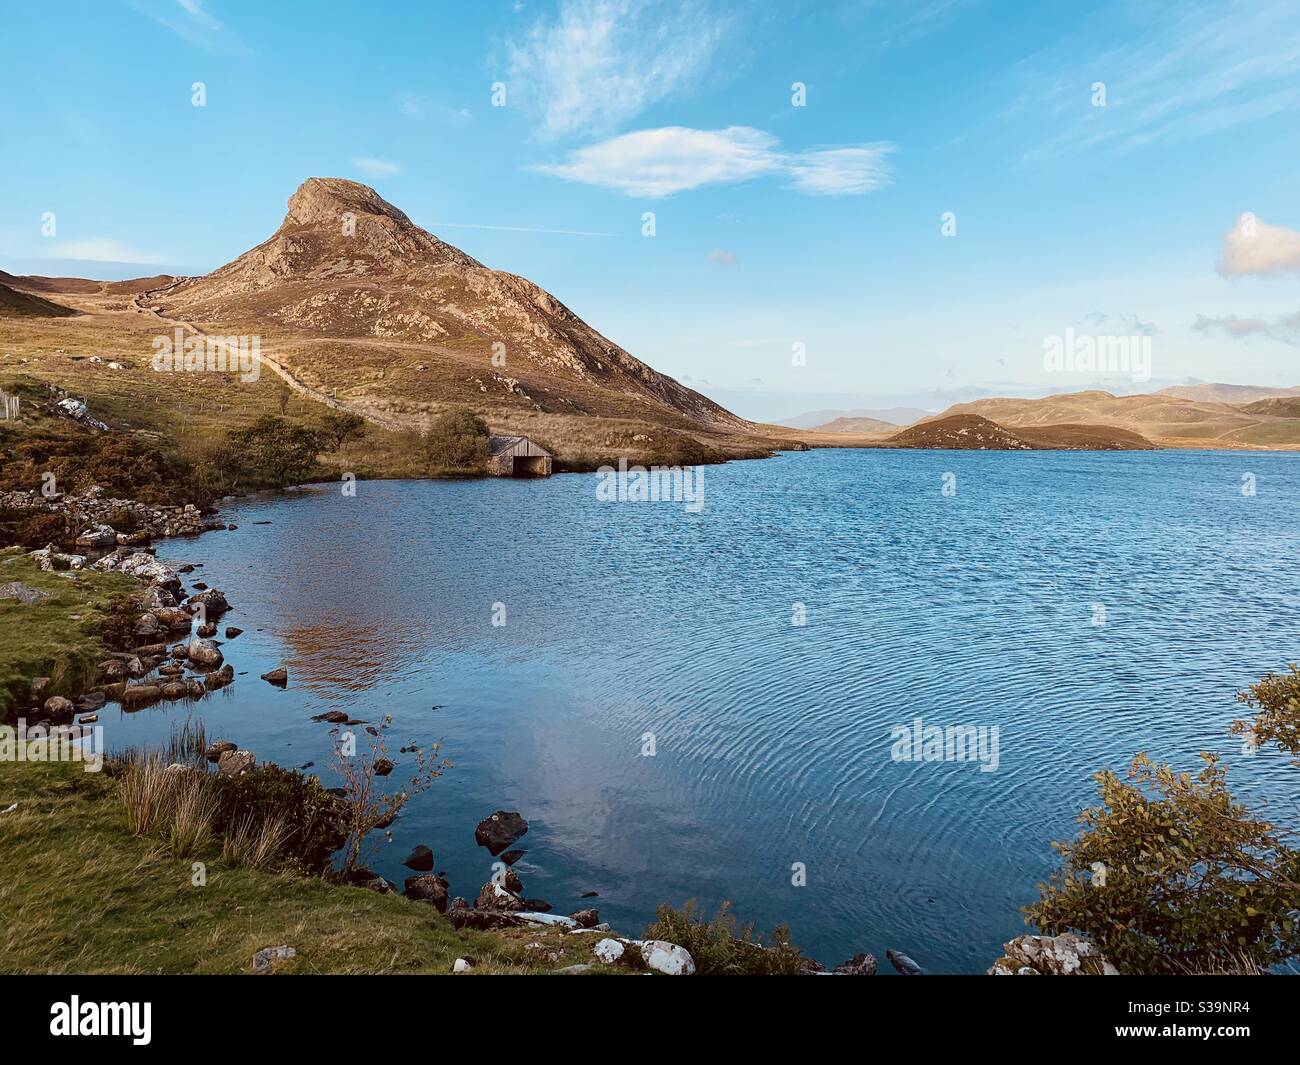 Lake view at Cregennan lake in Snowdonia, Wales. Stock Photo